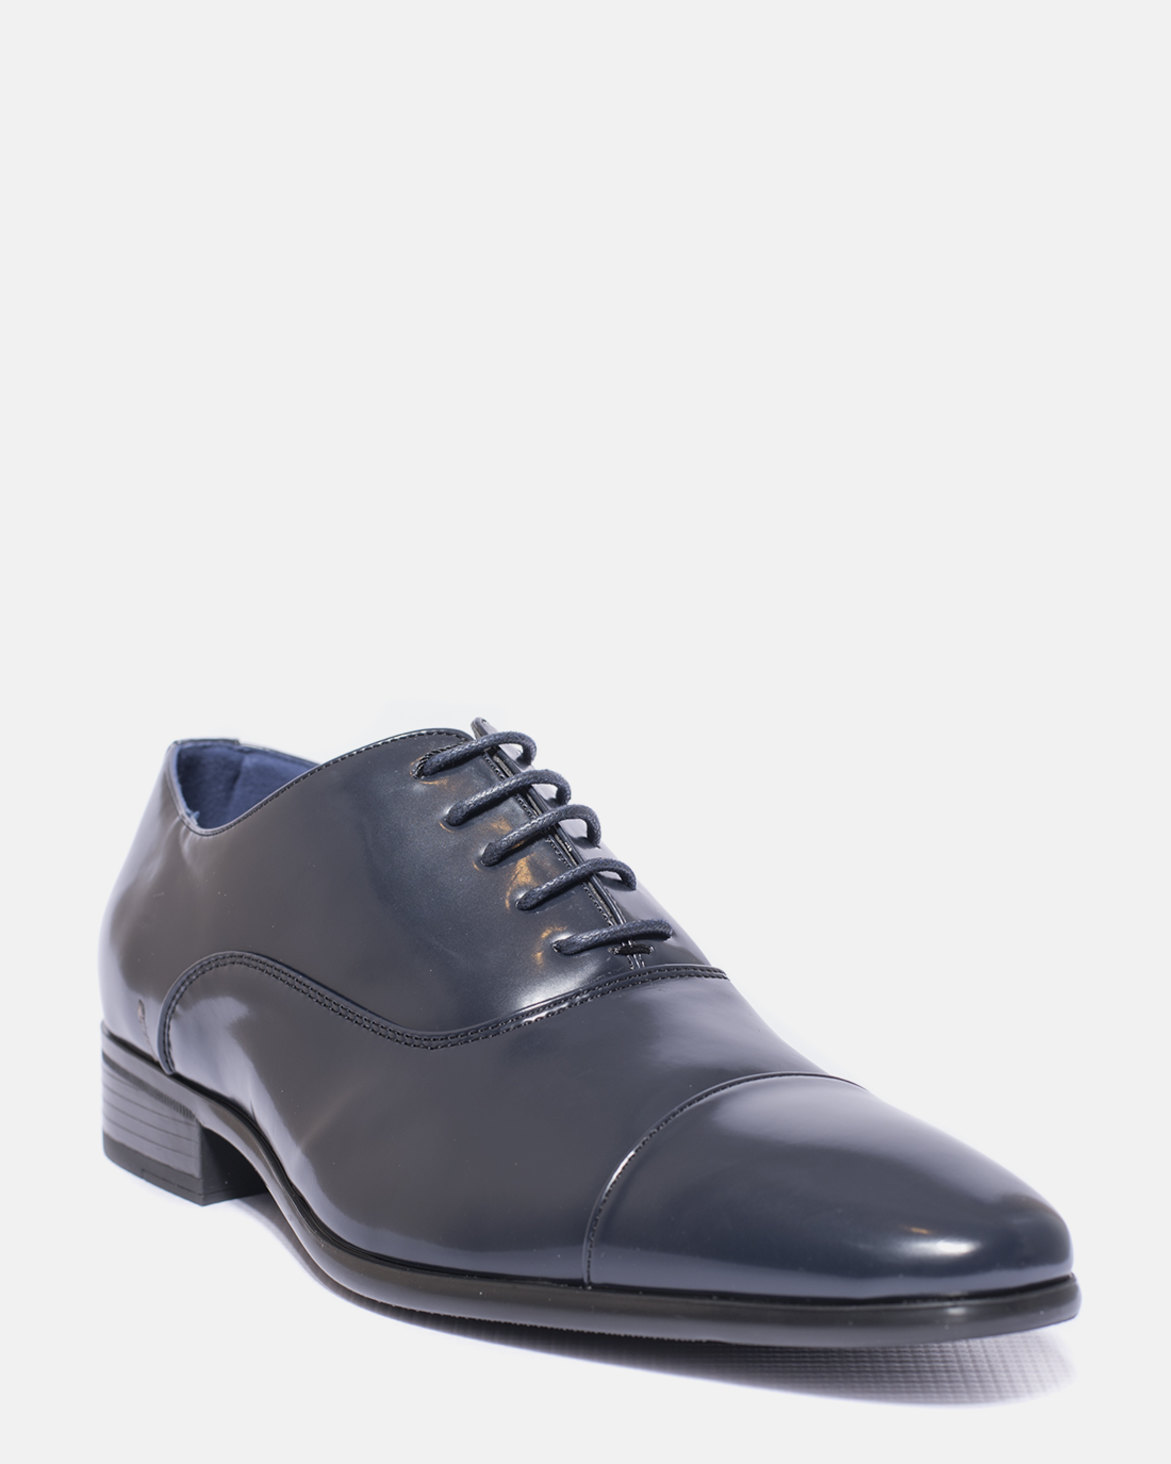 Enrico Coveri Formal Shoes Black | Zando